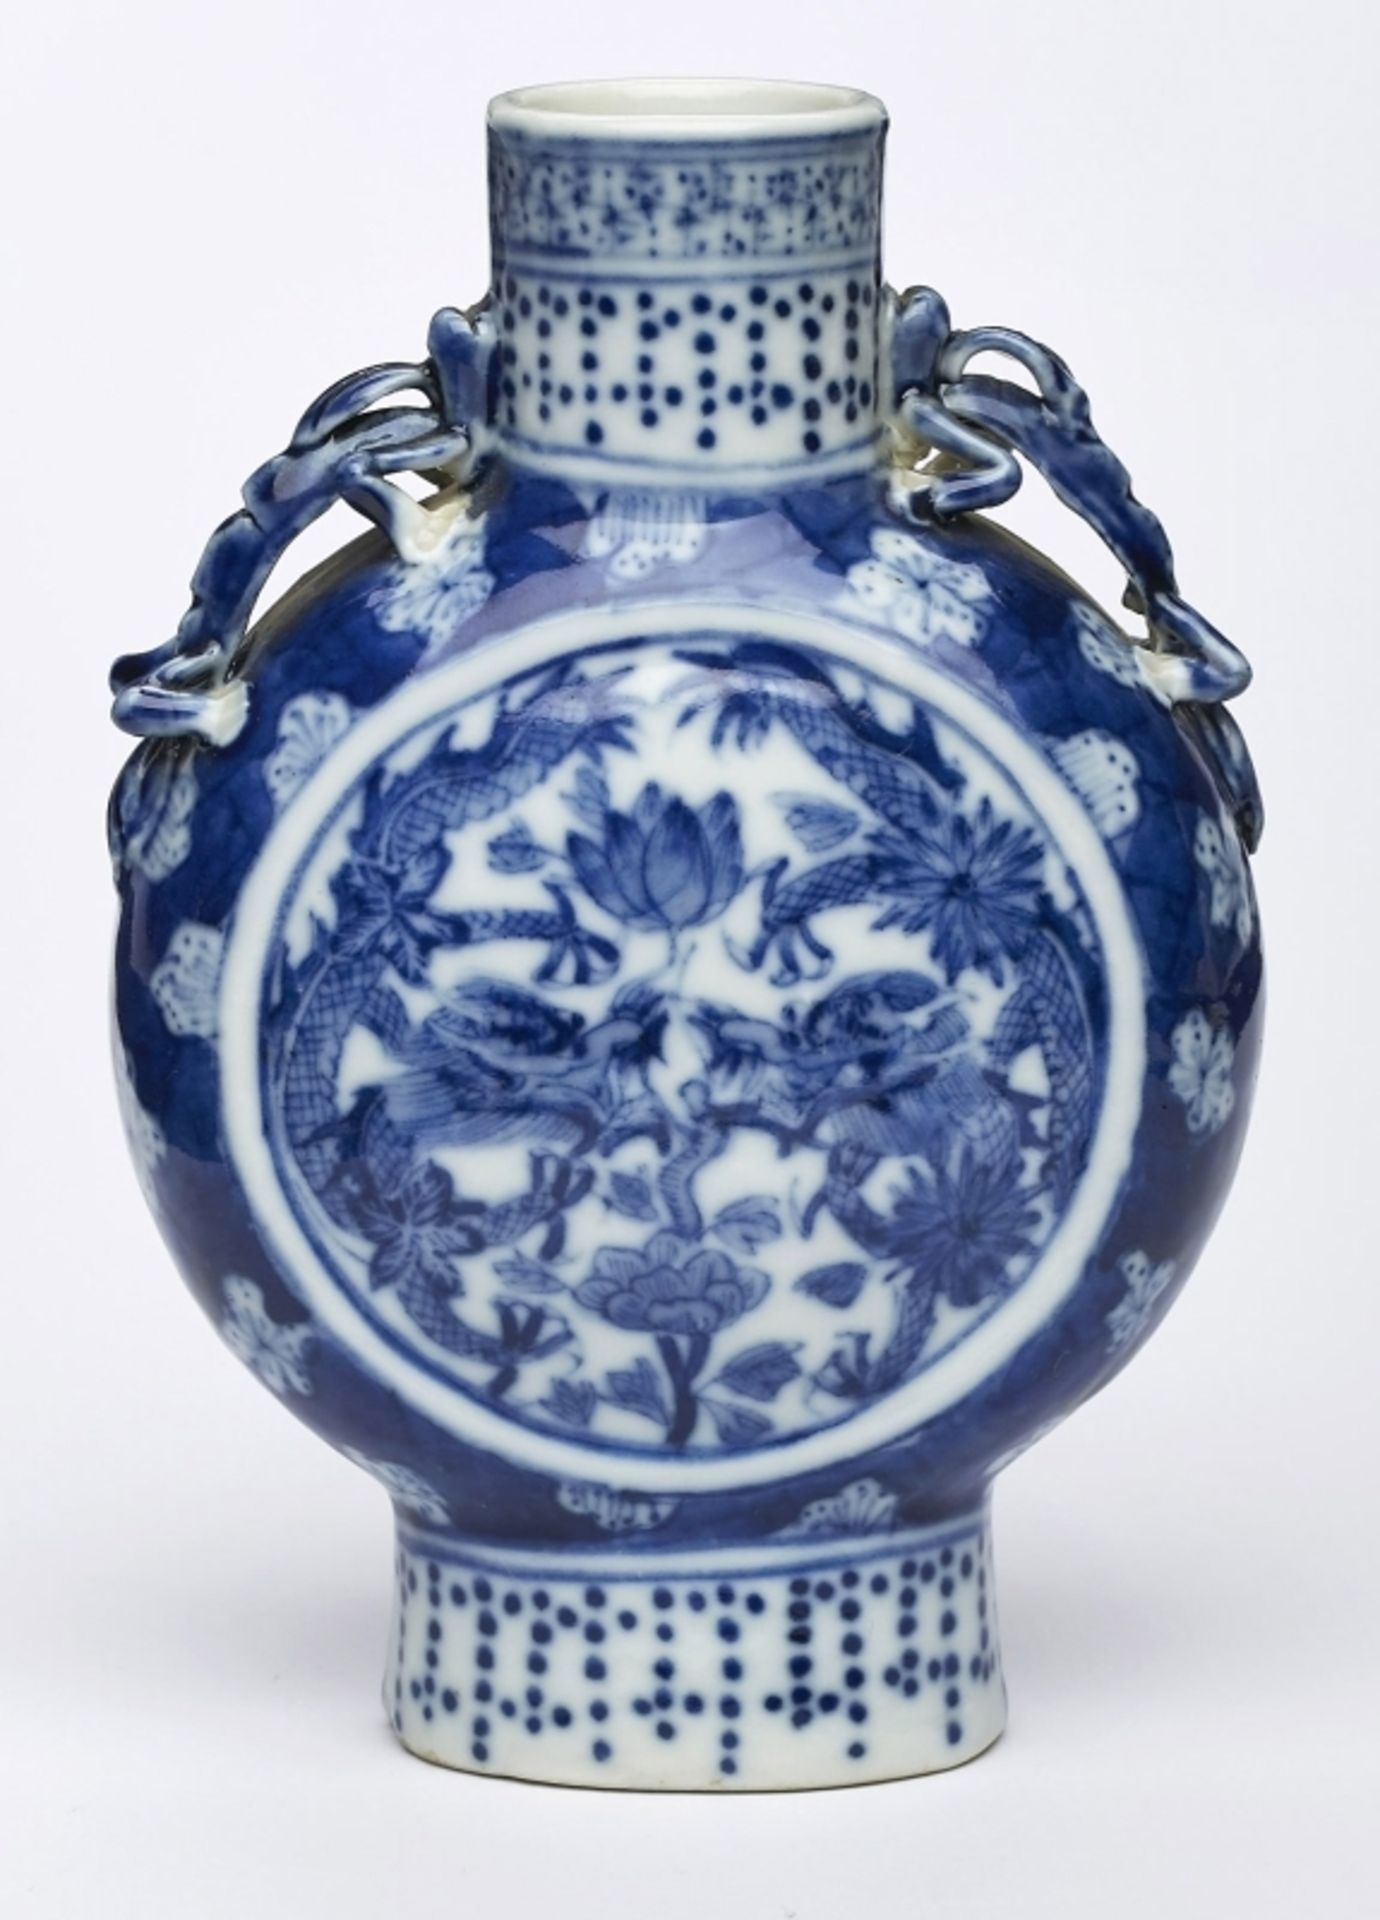 Kl. Vase/ "Moon vase", China 19. Jh.